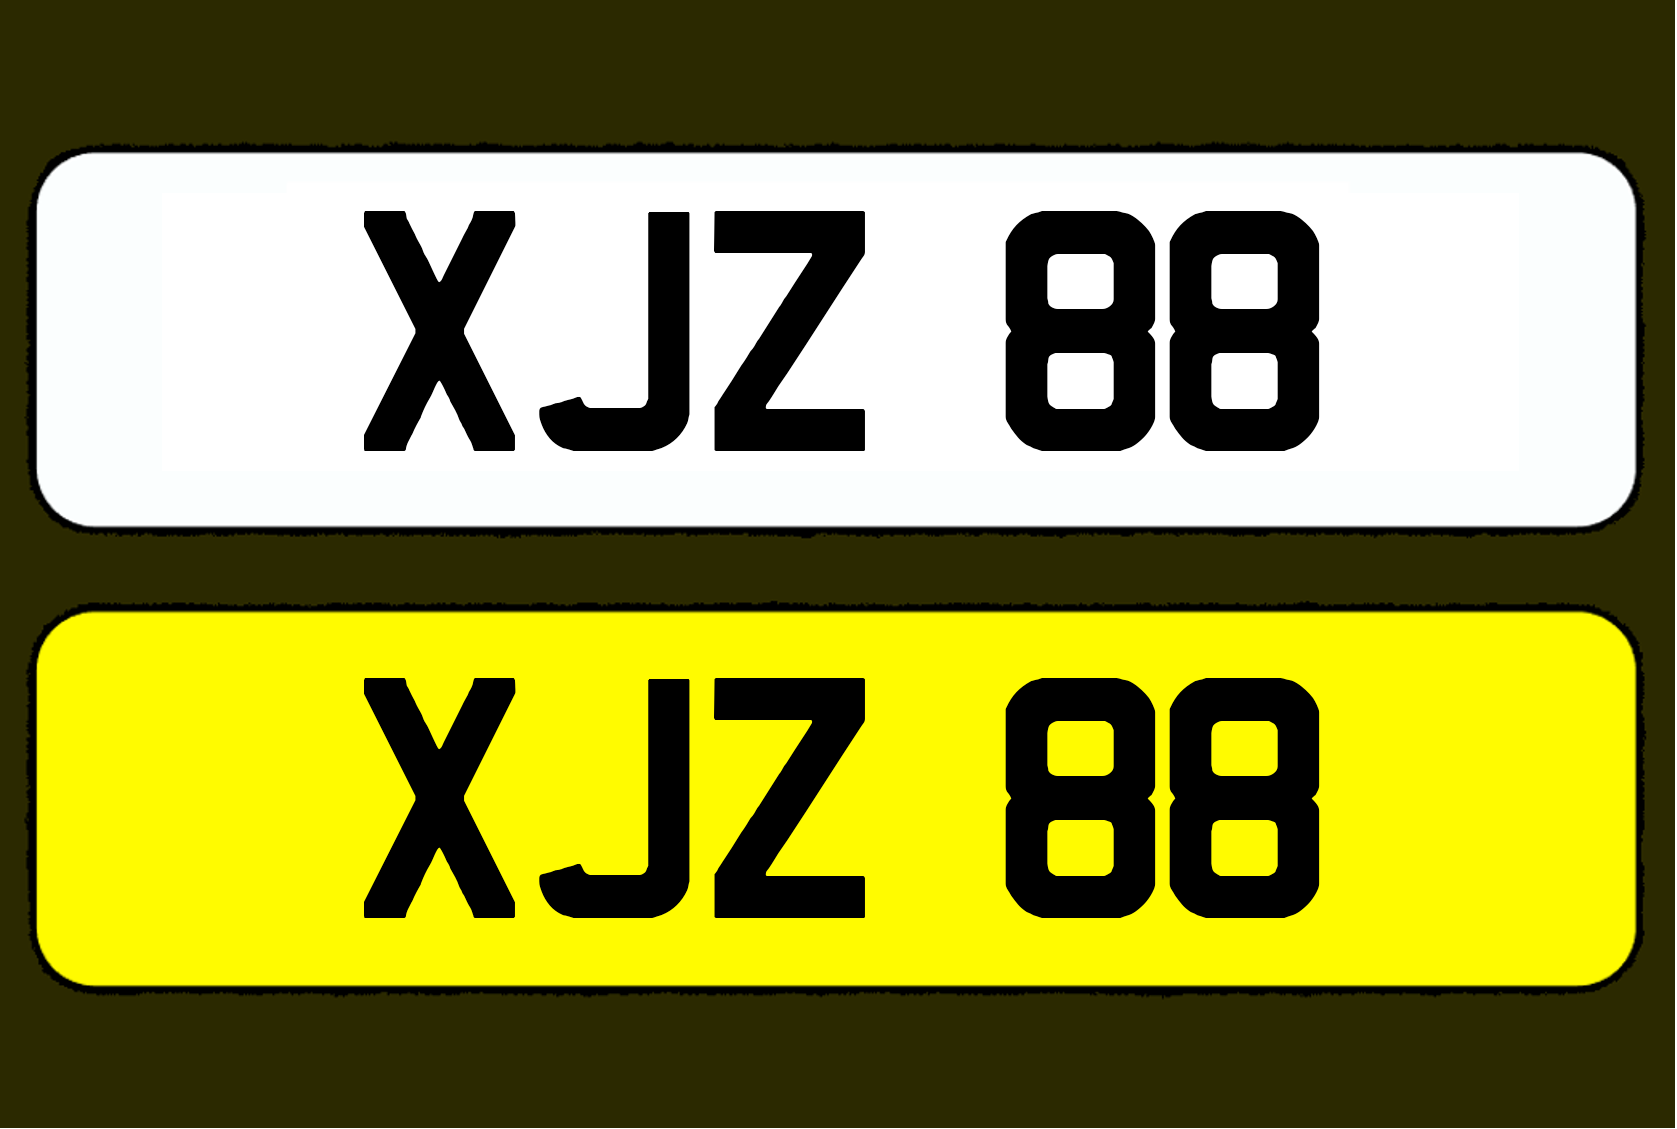 XJZ 88